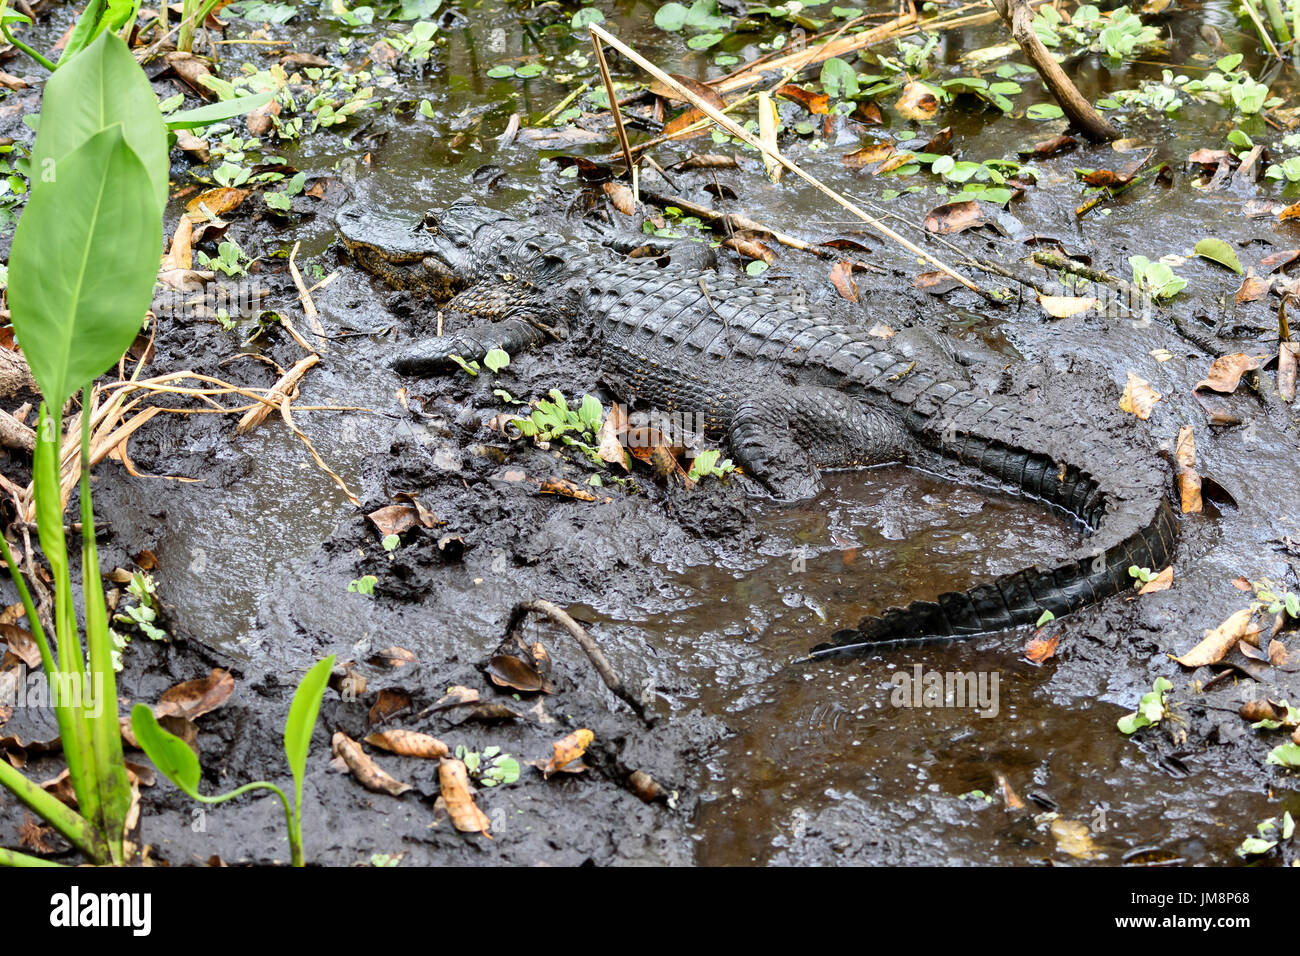 American Alligator (Alligator mississippiensis) in Corkscrew Swamp Sanctuary, Florida, USA Stock Photo